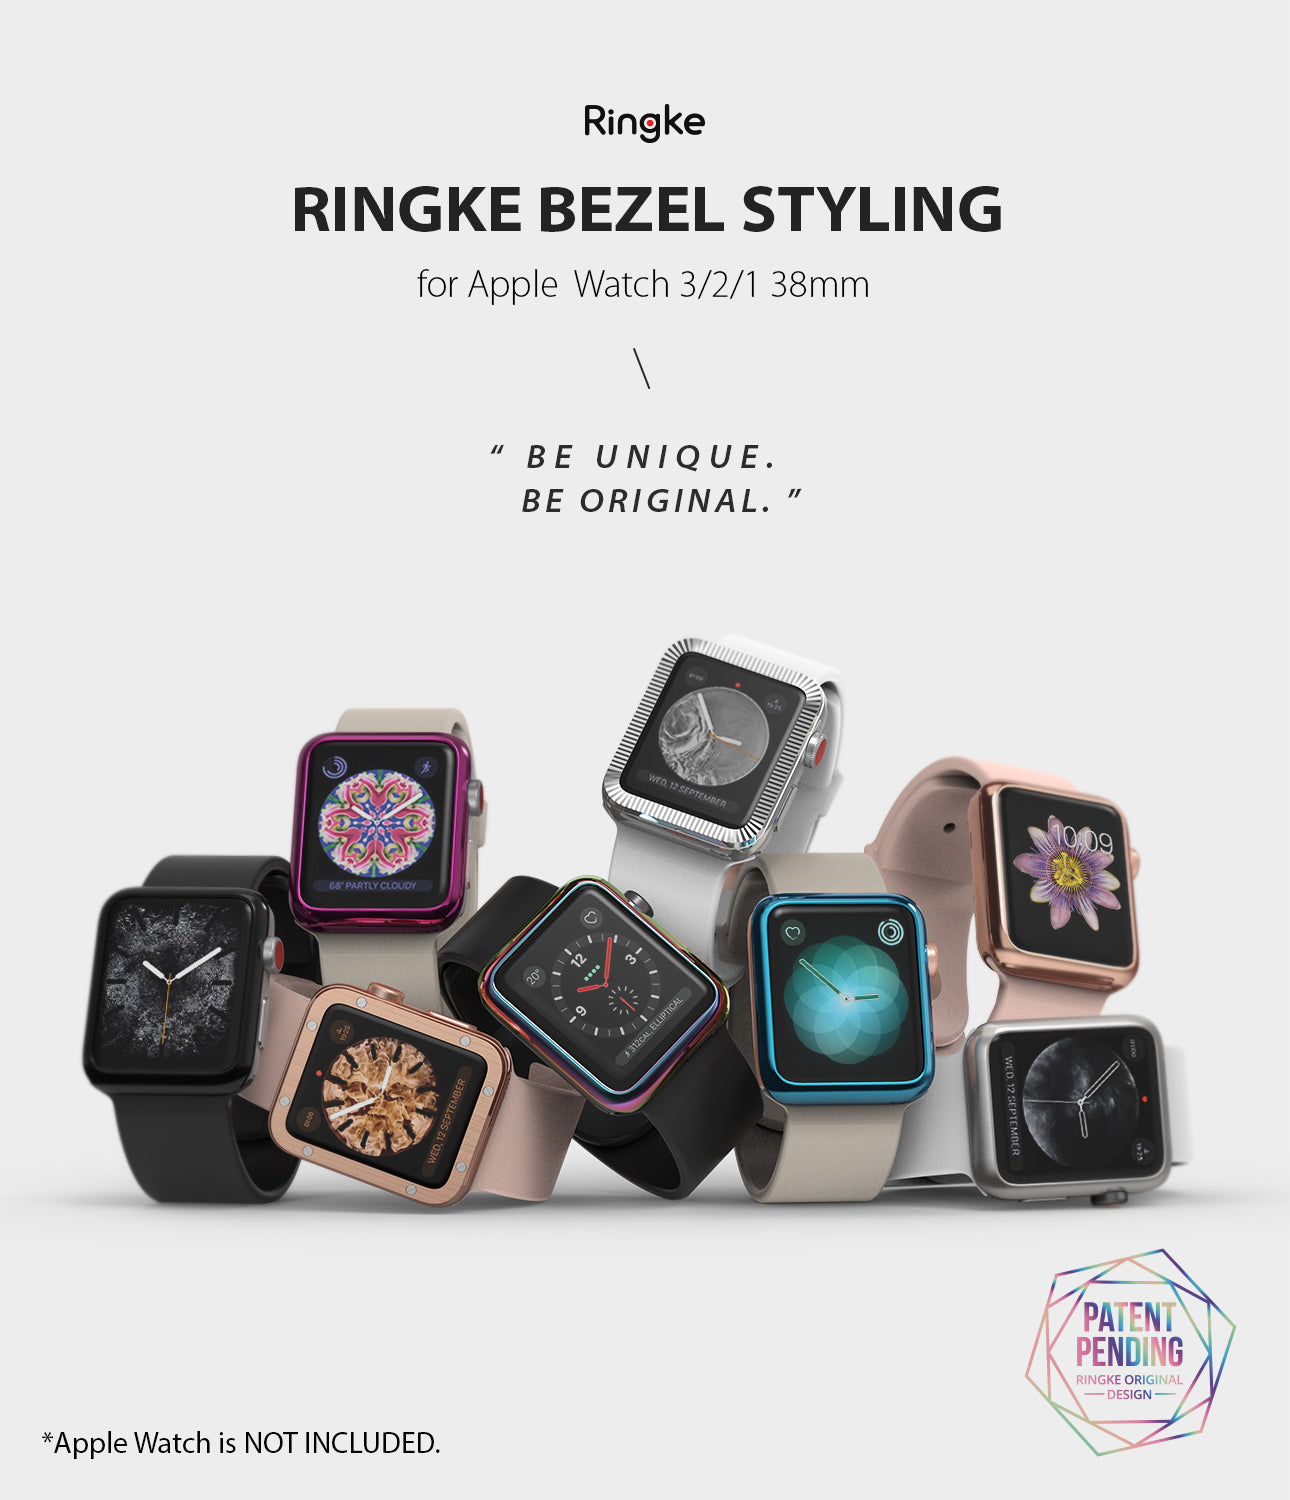 apple watch 3 2 1 38mm case ringke bezel styling stainless steel frame cover 38-05